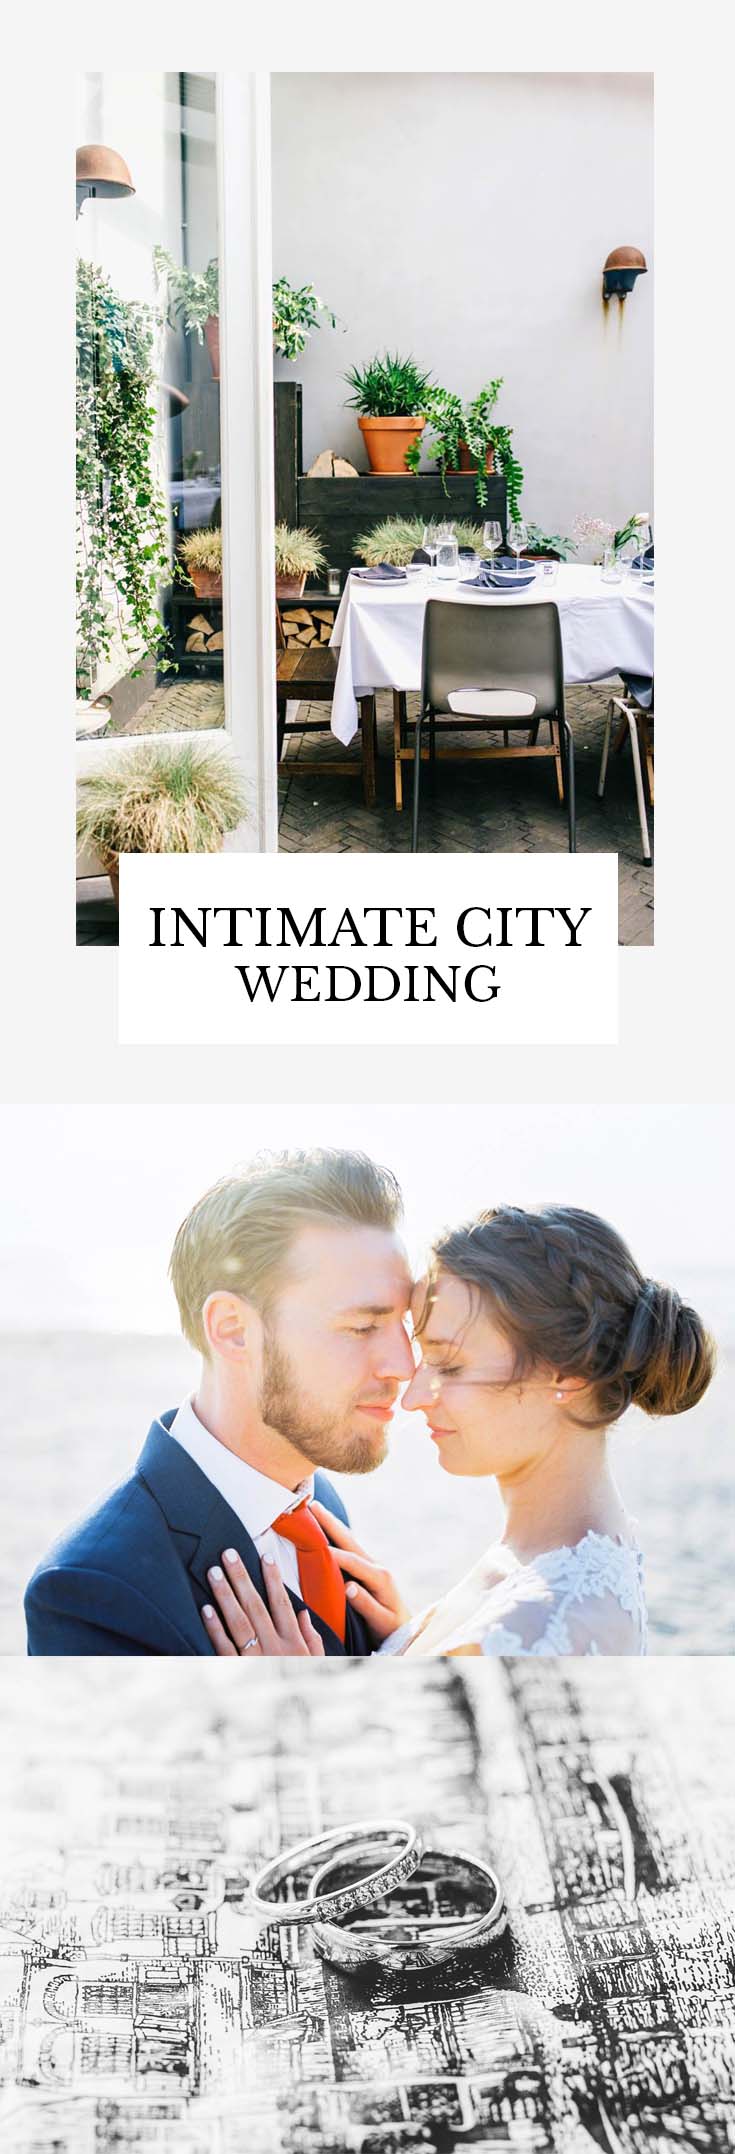 Intimate city wedding